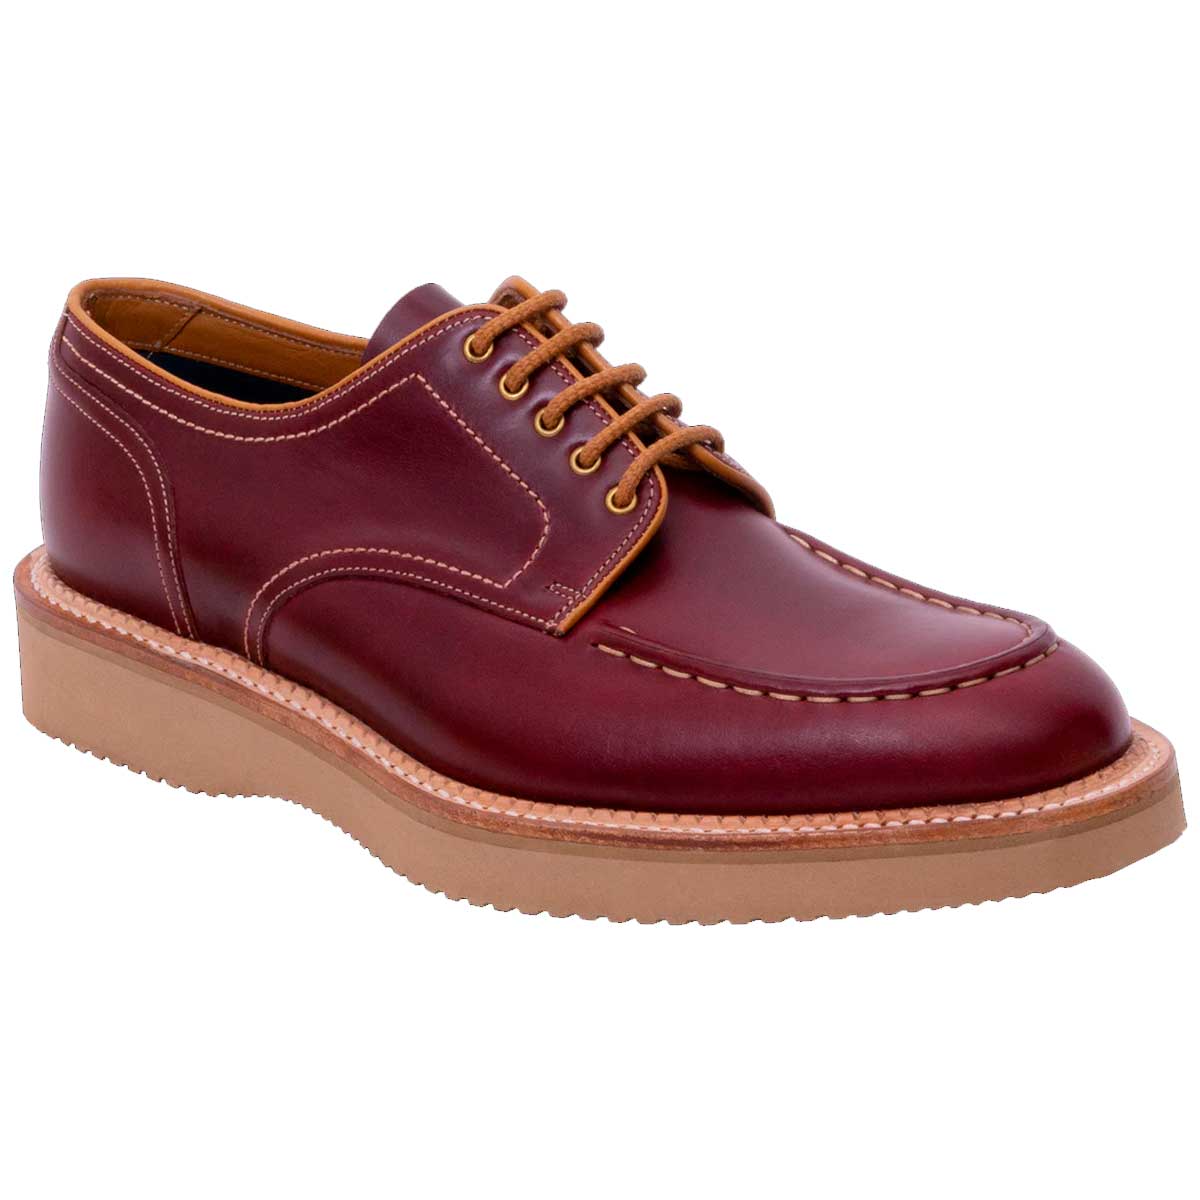 BARKER Michigan Shoes - Mens - Burgundy Waxy Calf